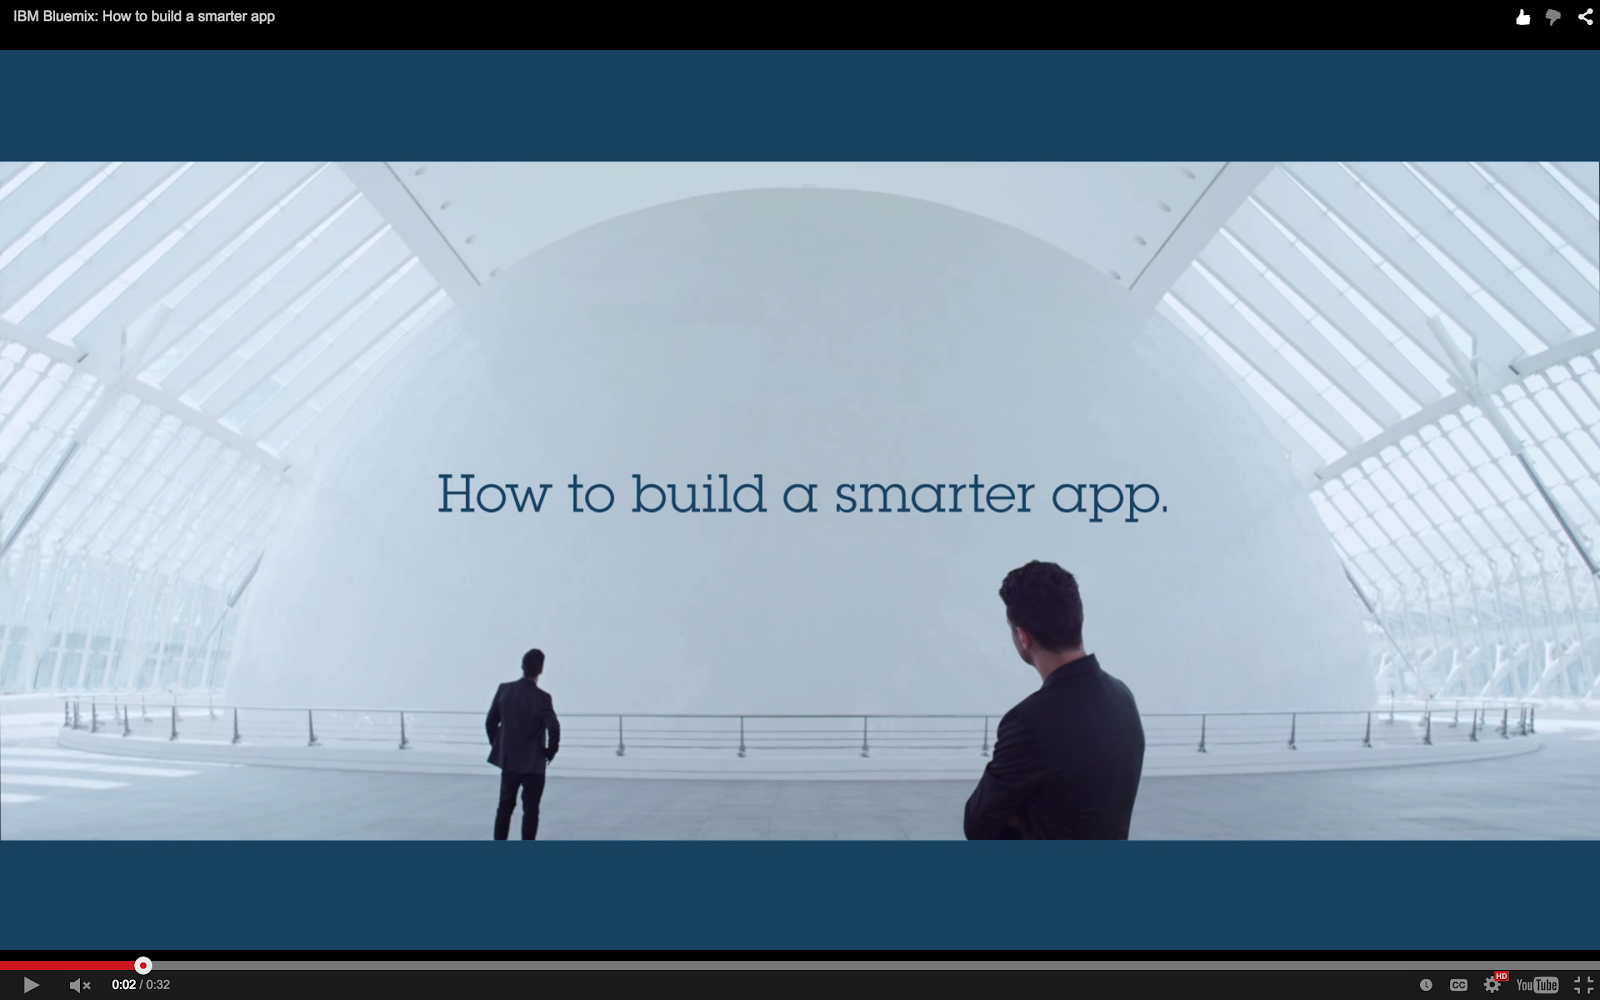 Bluemix YouTube: How to Build a Smarter App